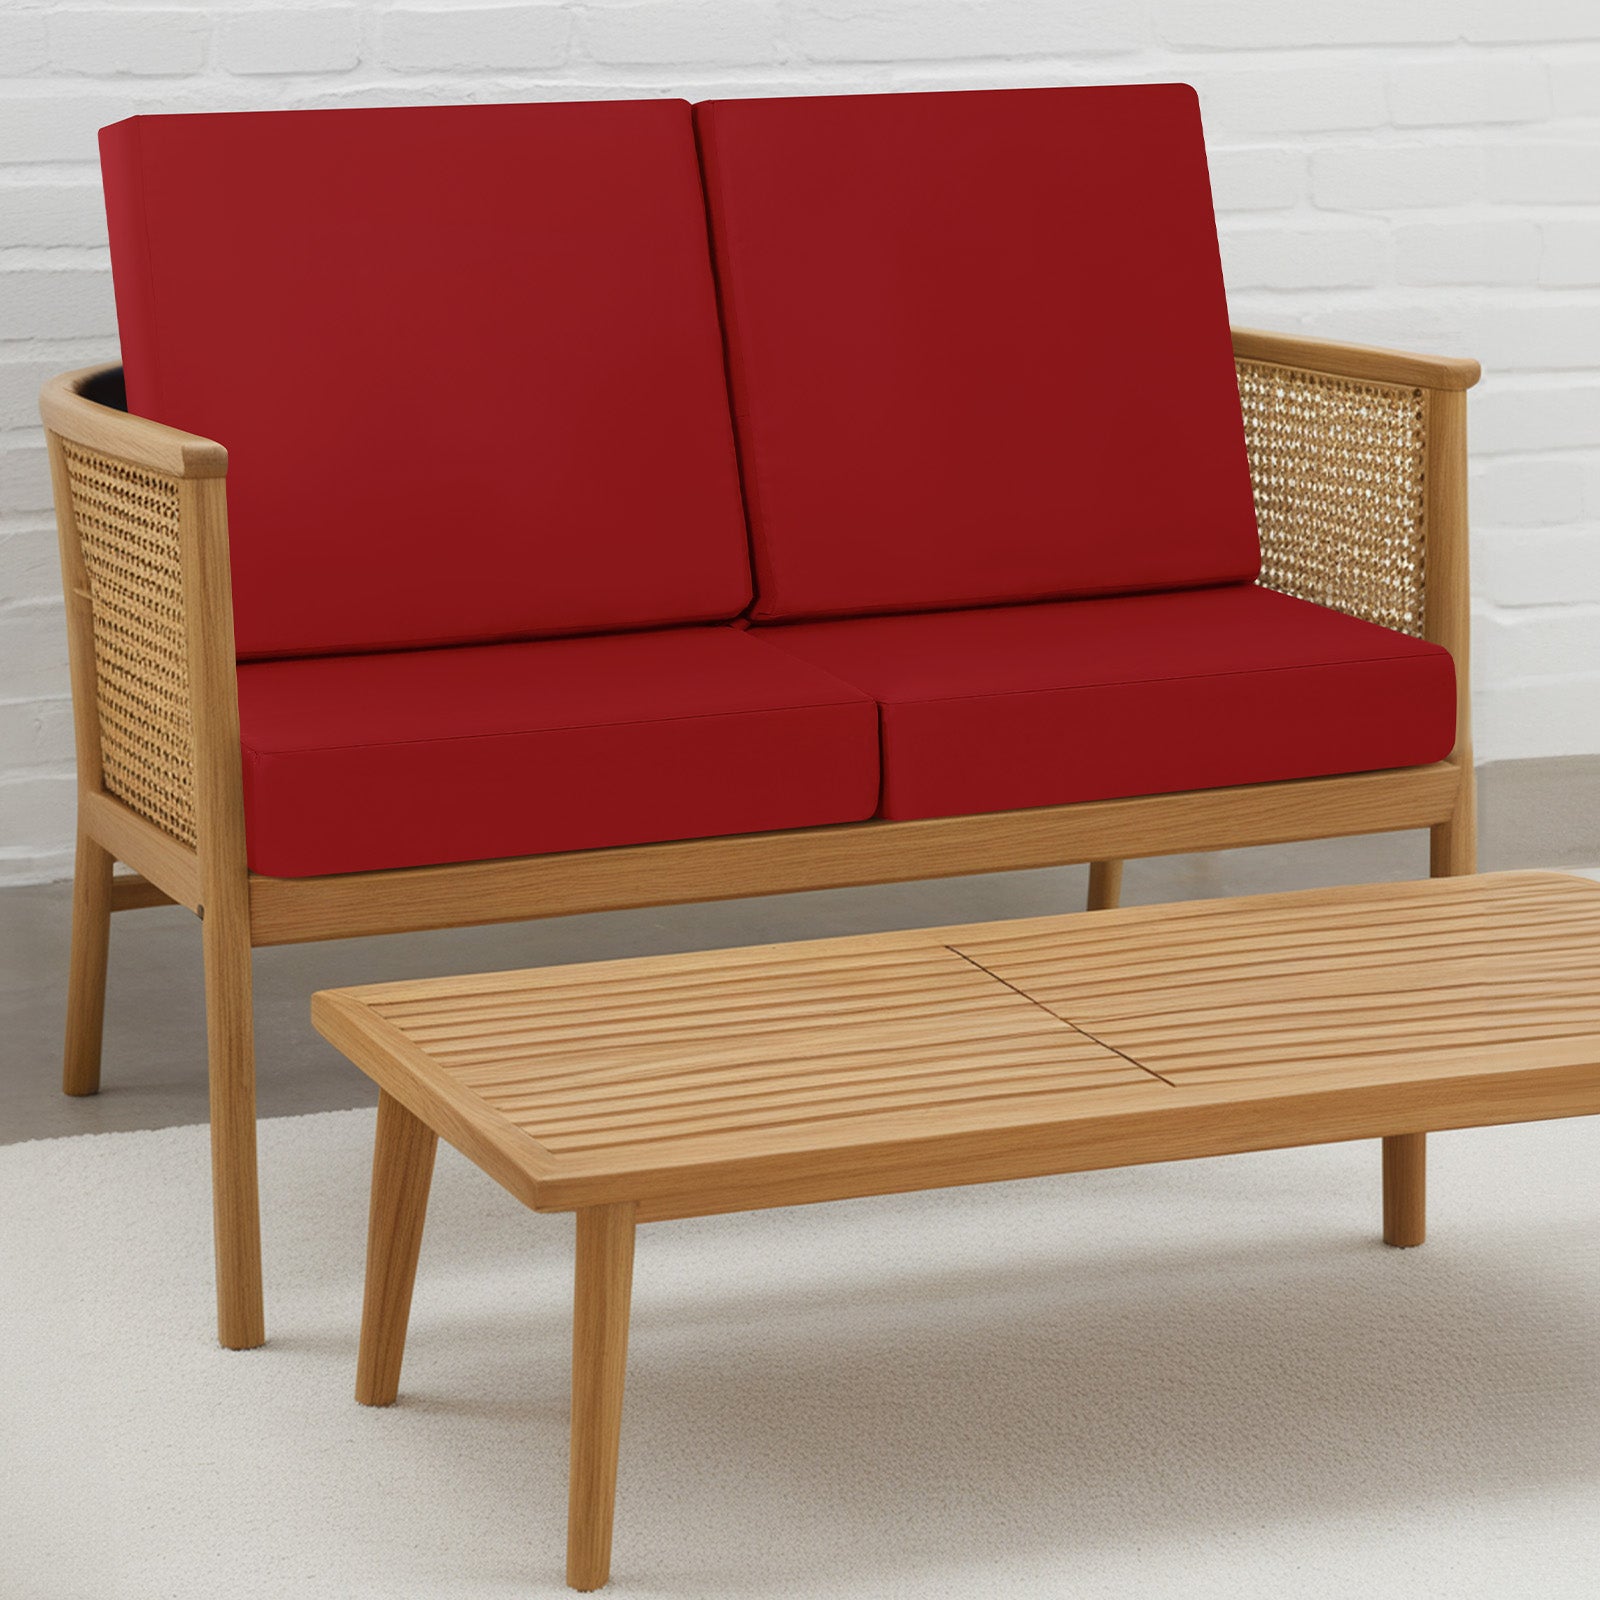 idee-home Outdoor Chair Cushions